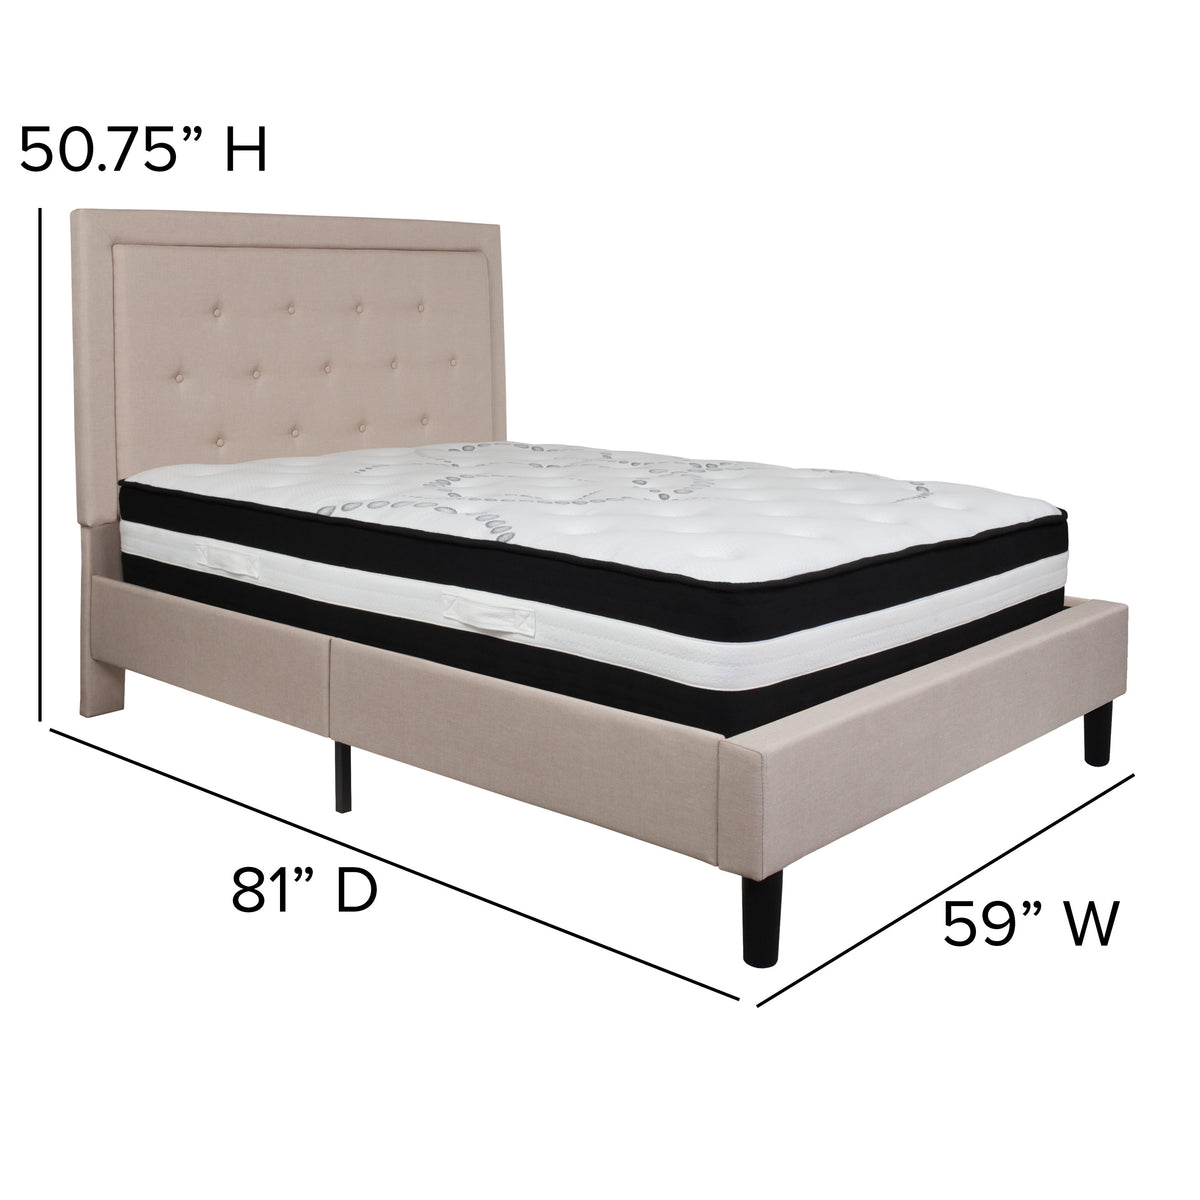 Beige,Full |#| Full Size Panel Tufted Beige Fabric Platform Bed with Pocket Spring Mattress